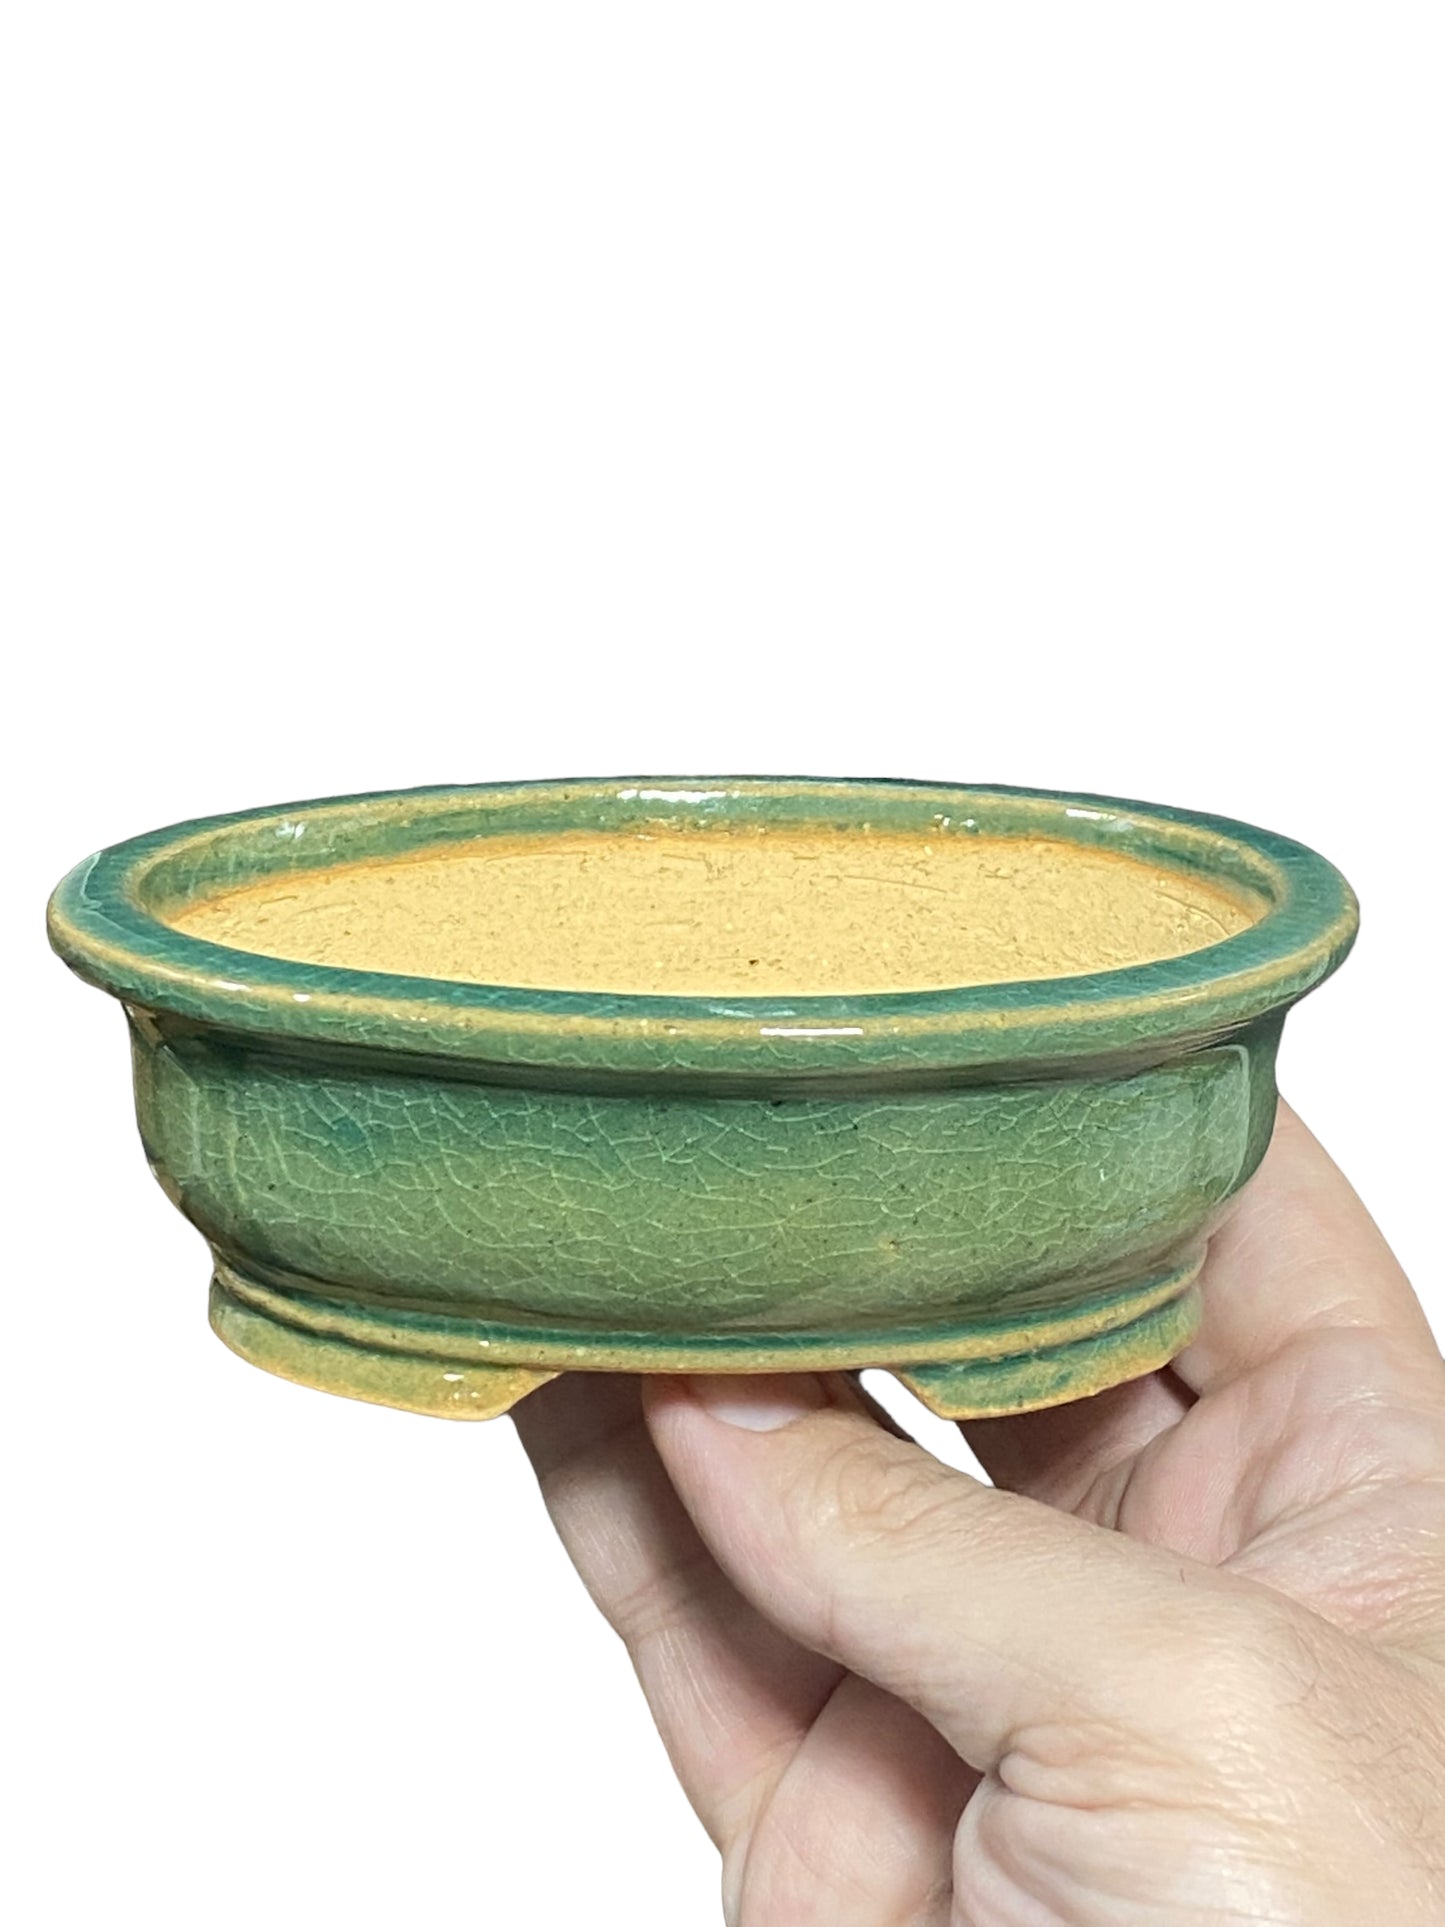 Shibakatsu - Stellar Crackle Glazed Oval Style Bonsai Pot